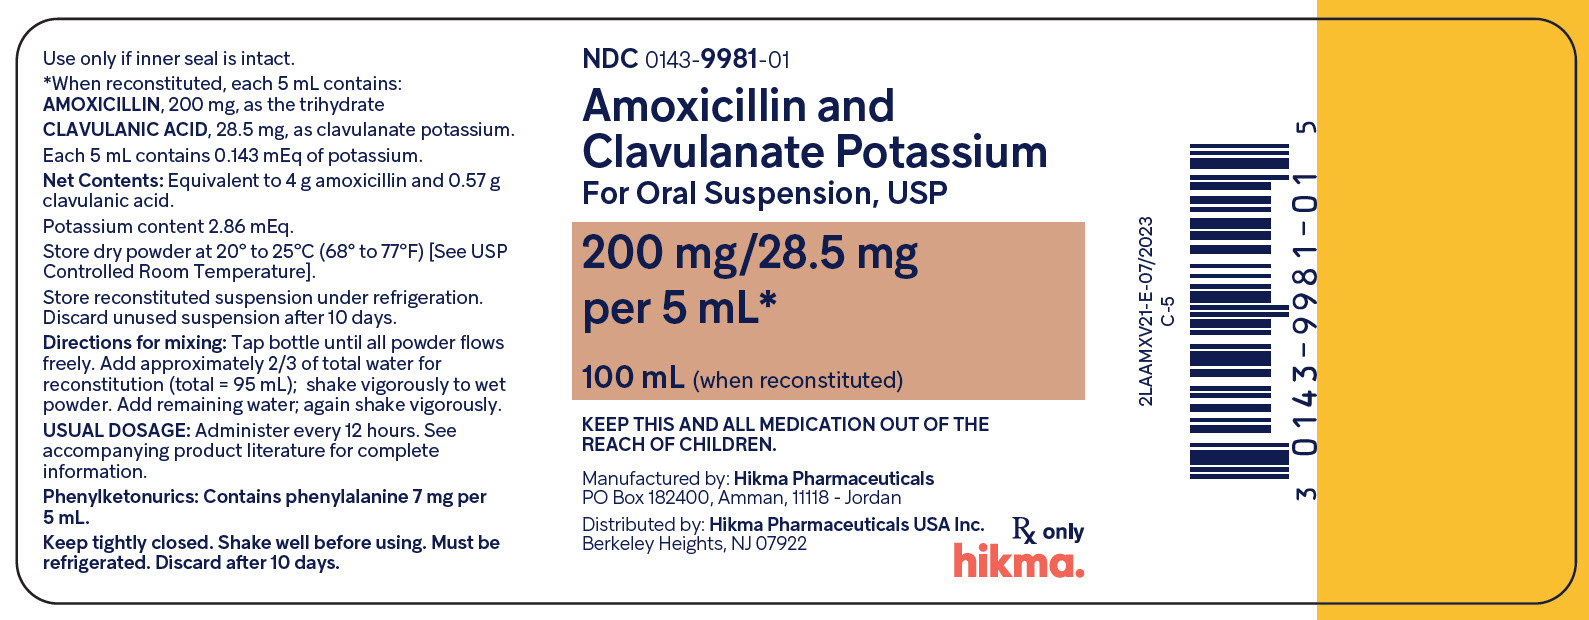 NDC 0143-9981-01 Amoxicillin and Clavulanate Potassium for Oral Suspension, USP *200 MG/28.5 MG Per 5ML